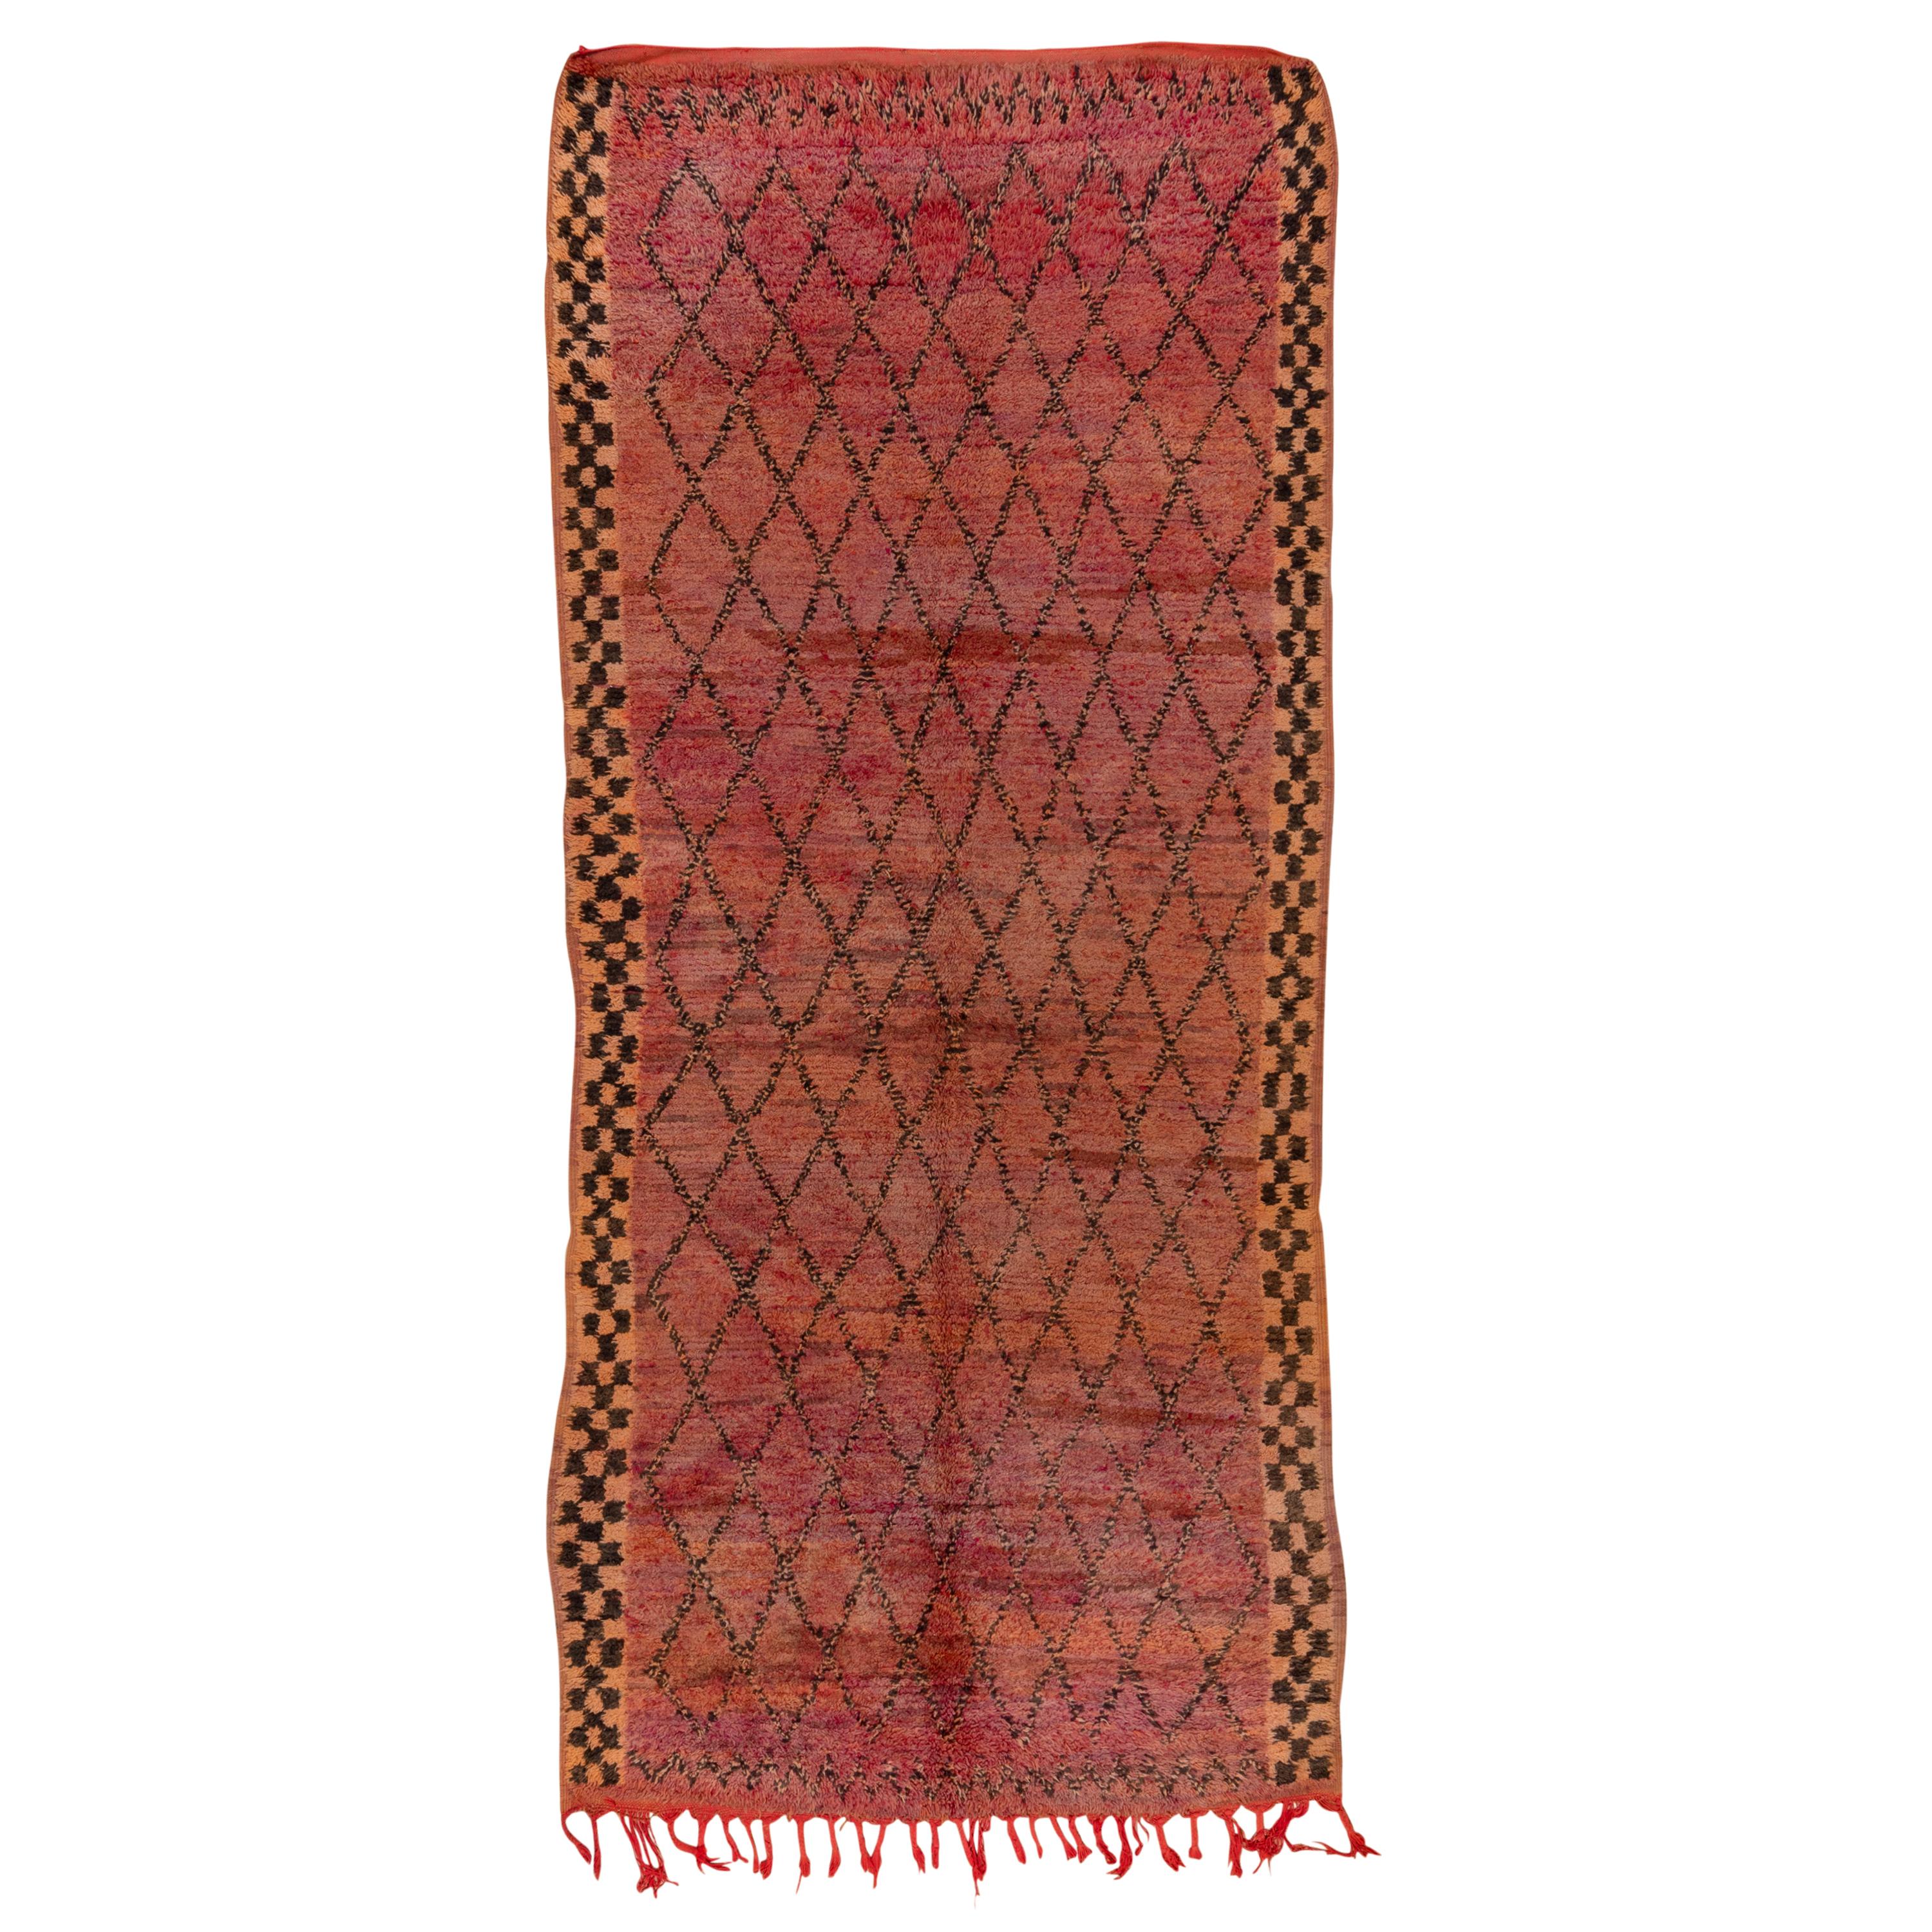 Vintage Moroccan Gallery Carpet, circa 1940s, Purple Field, Plaid Borders